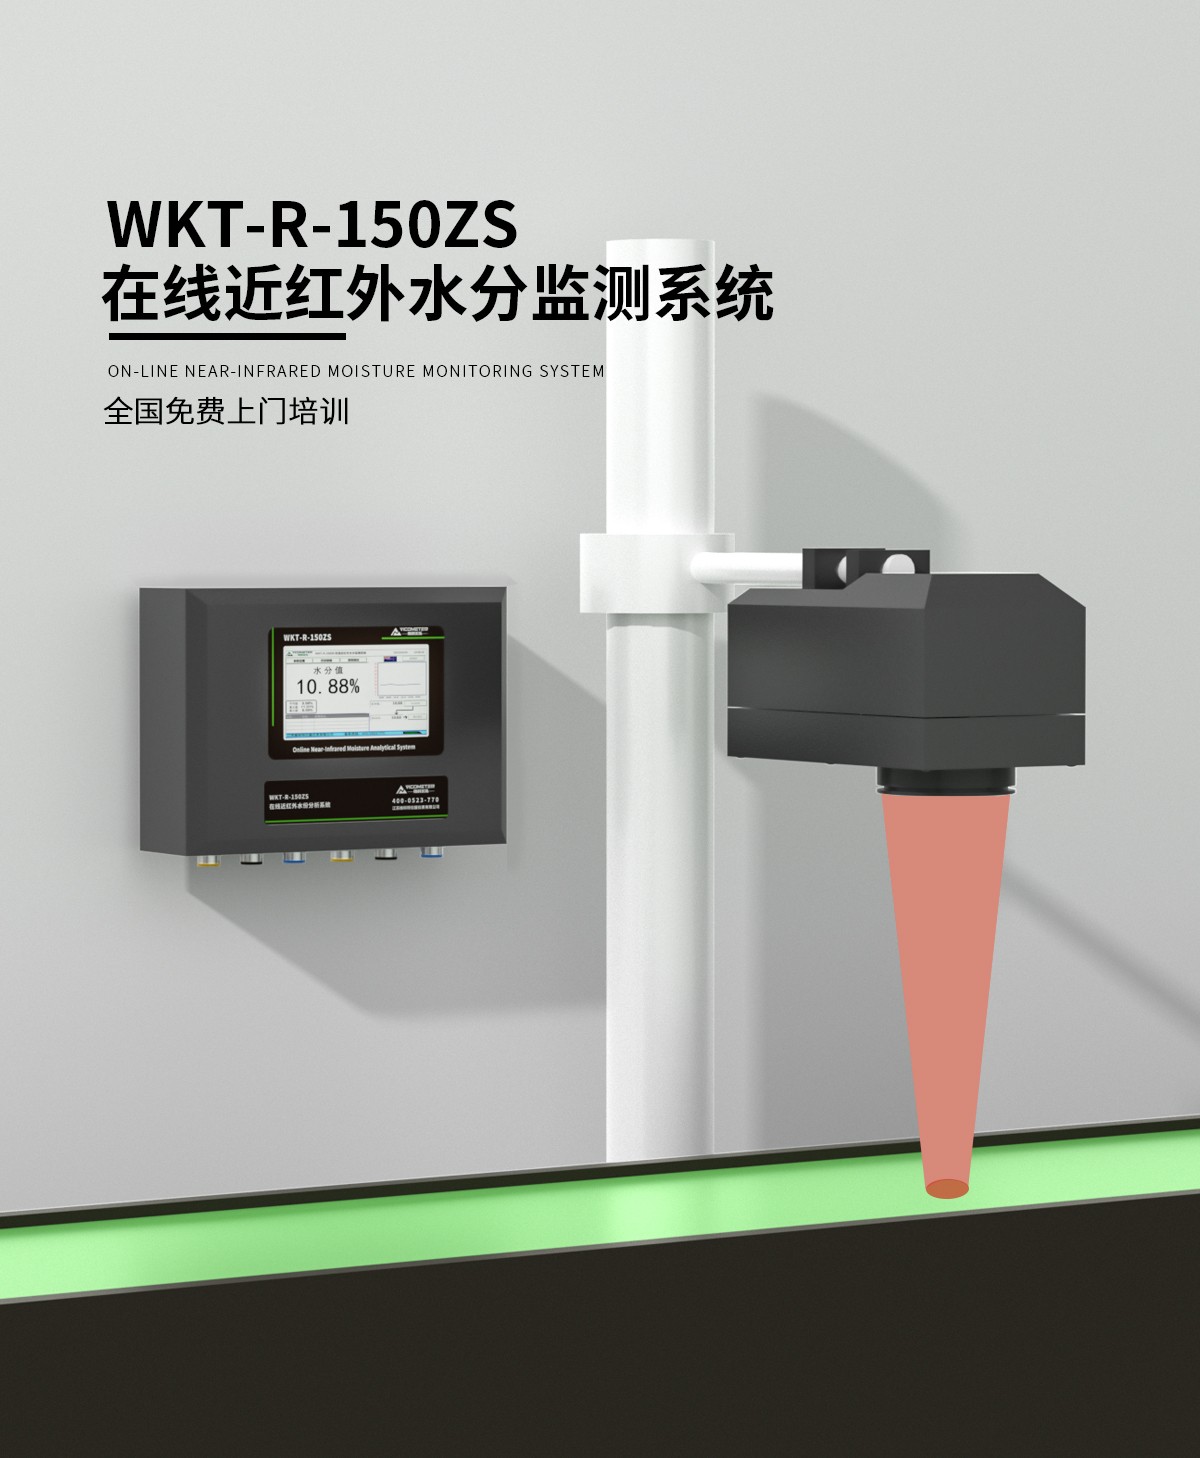 WKT-R-150ZS型近红外在线水分测试仪